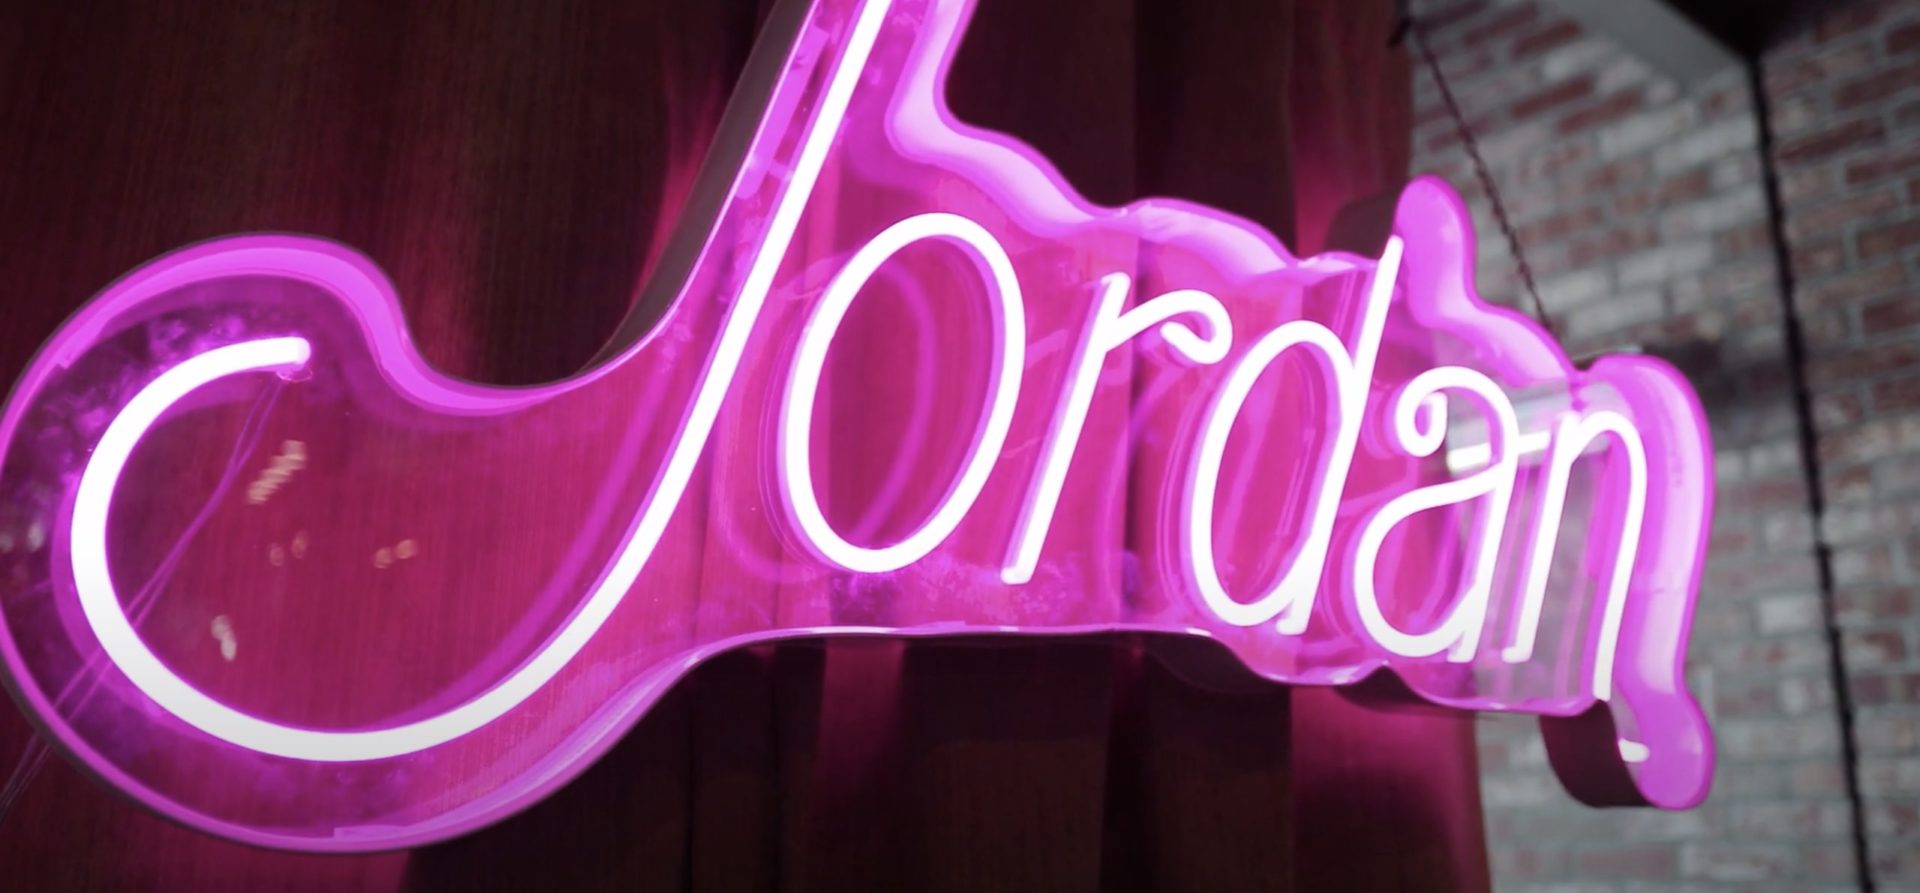 pink neon sign spelling jordan